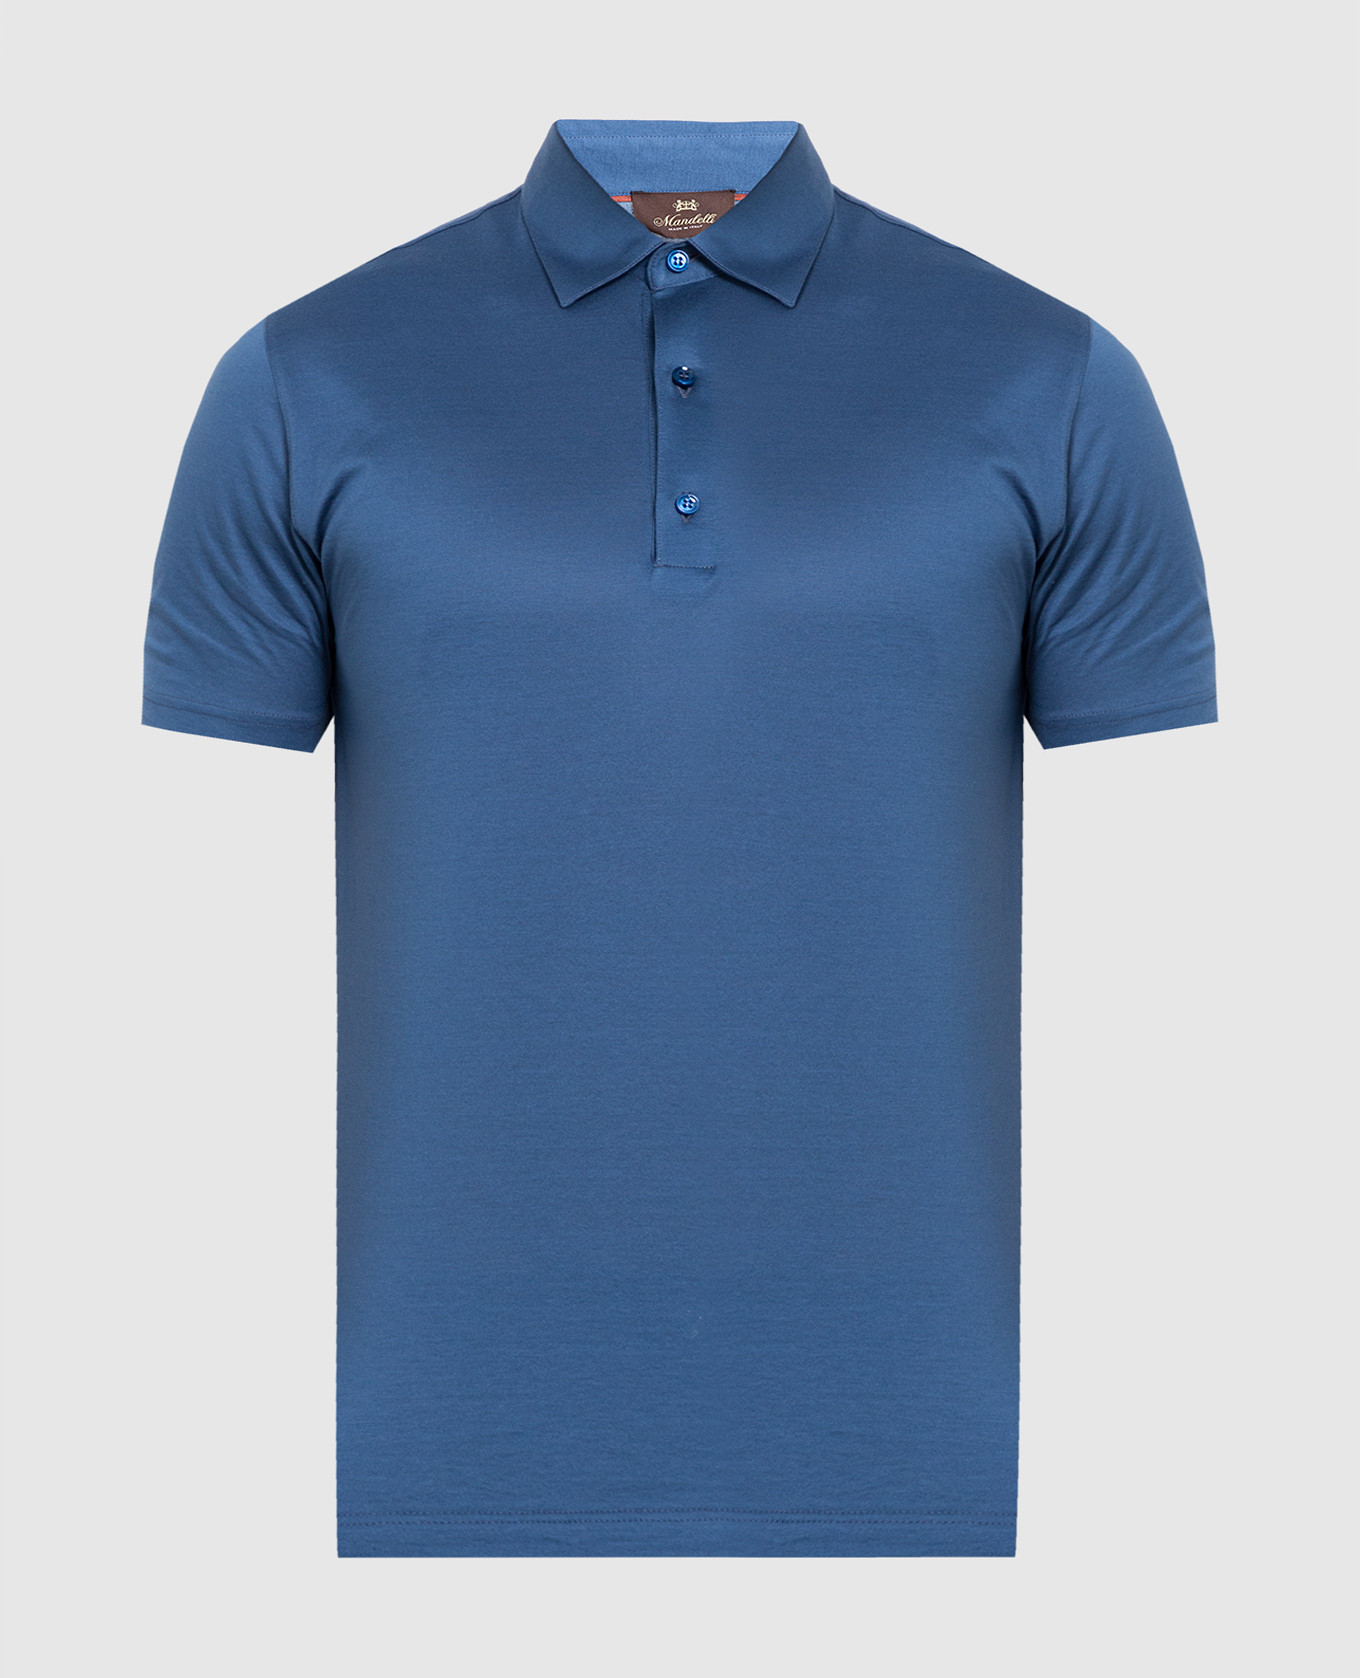 Light blue polo shirt